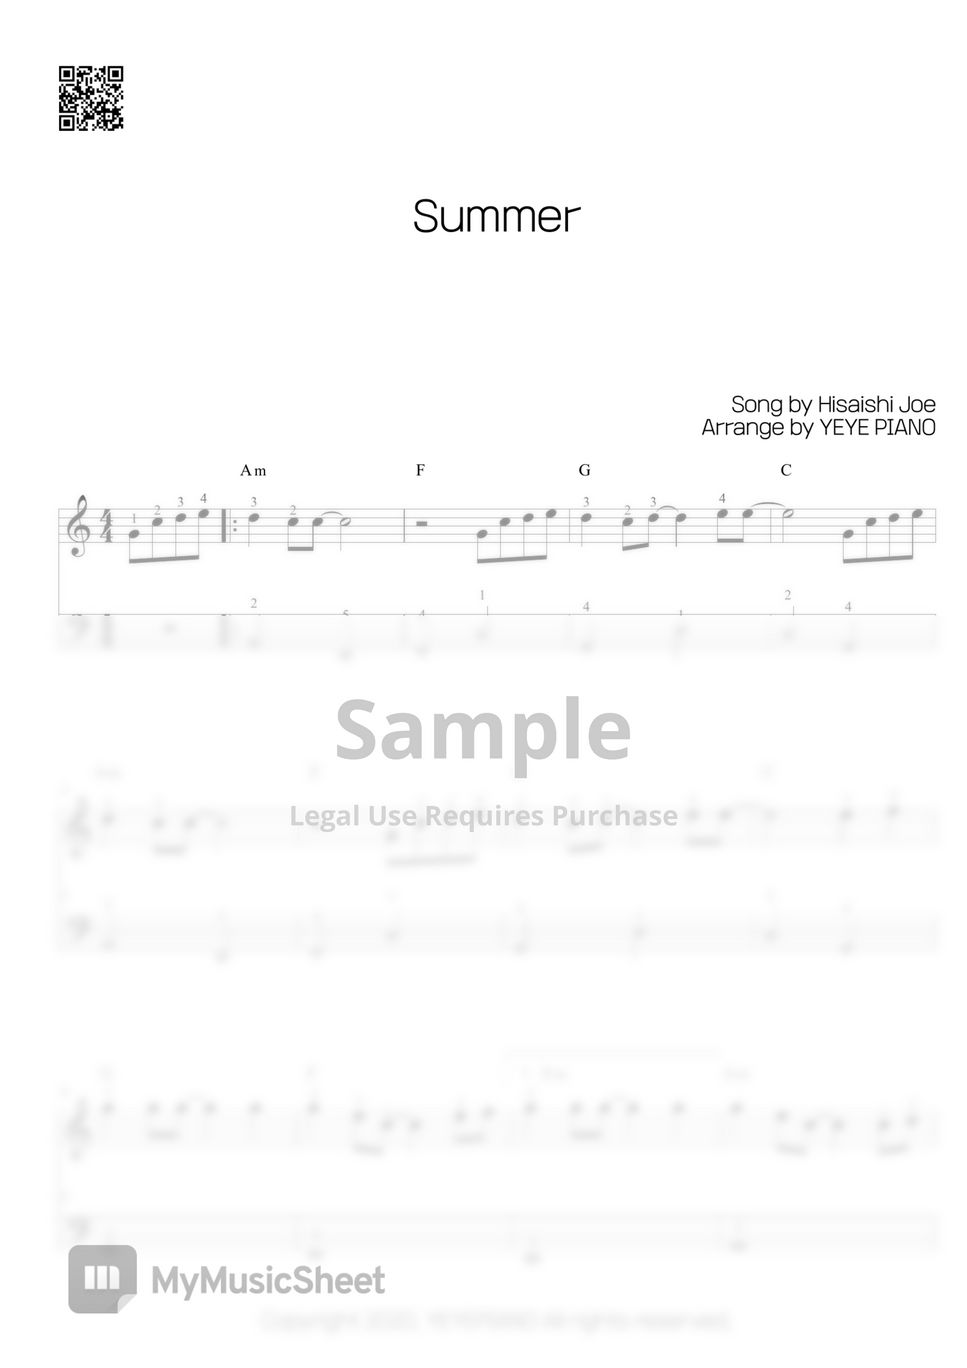 Hisaishi Joe - Summer (Summer Of Kikujiro(菊次郎の夏) OST) by 예예피아노(YEYE PIANO)